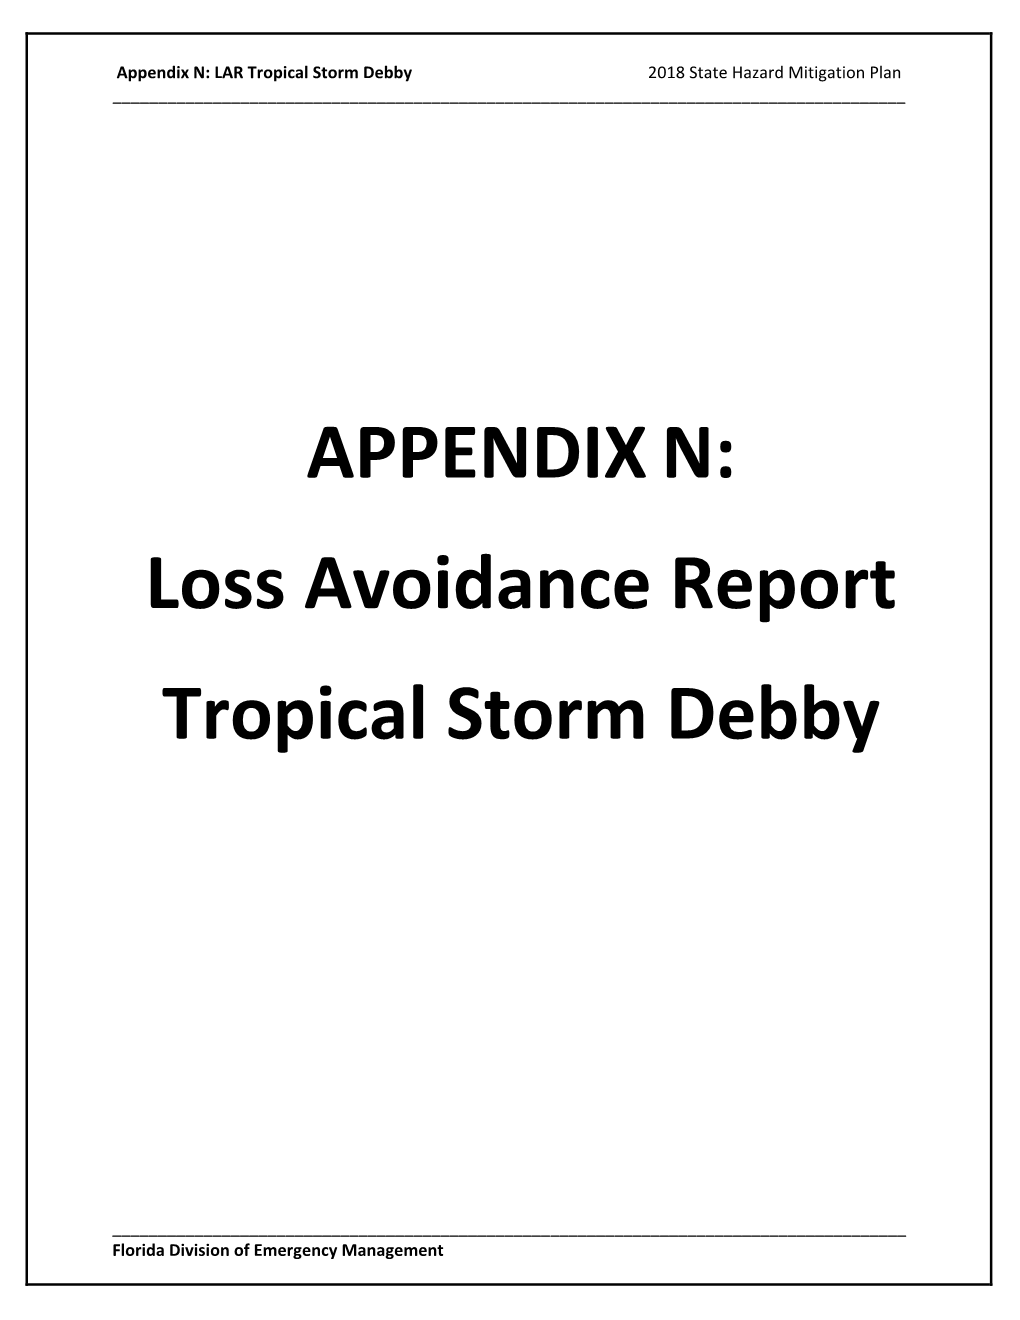 Appendix N LAR Trpical Storm Debby